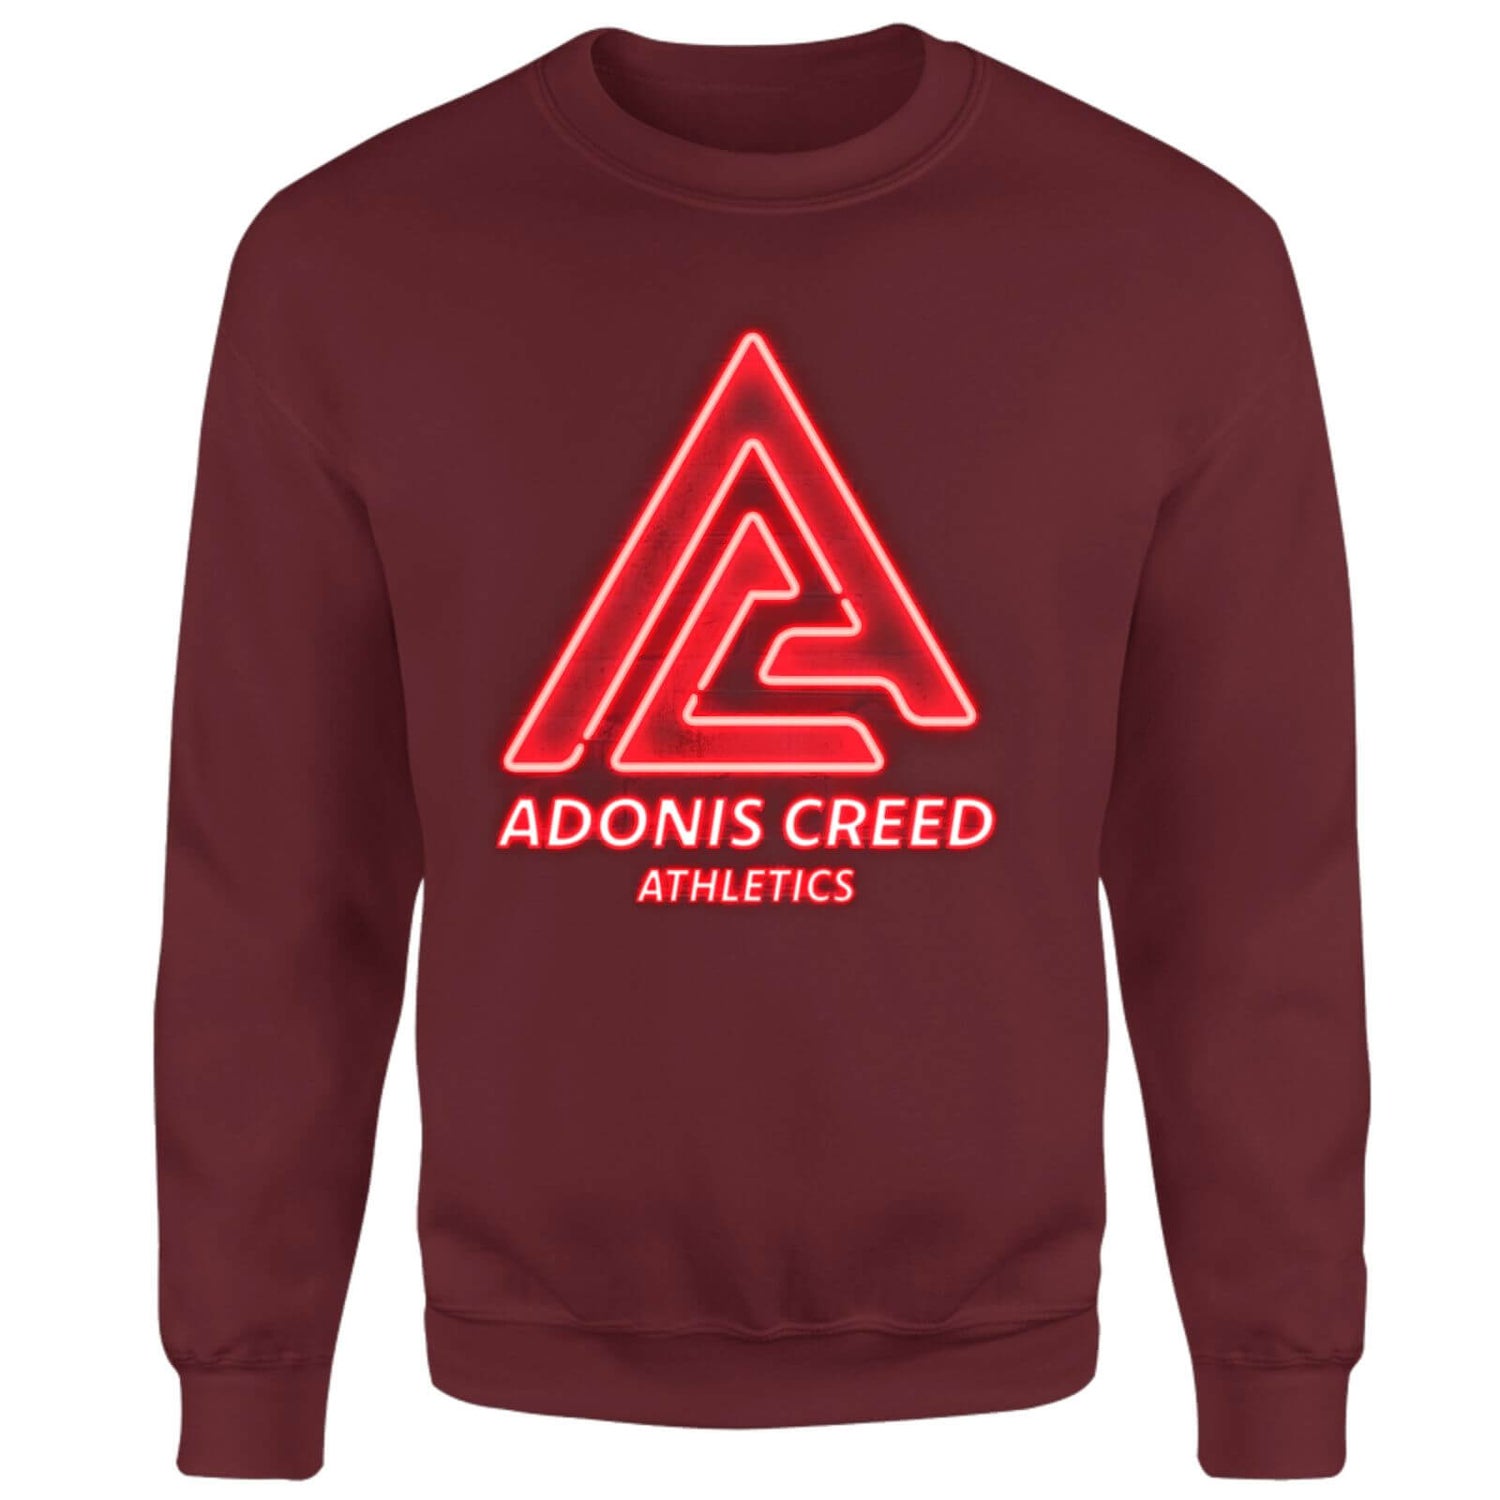 Creed Adonis Creed Athletics Neon Sign Sweatshirt - Burgundy - XS